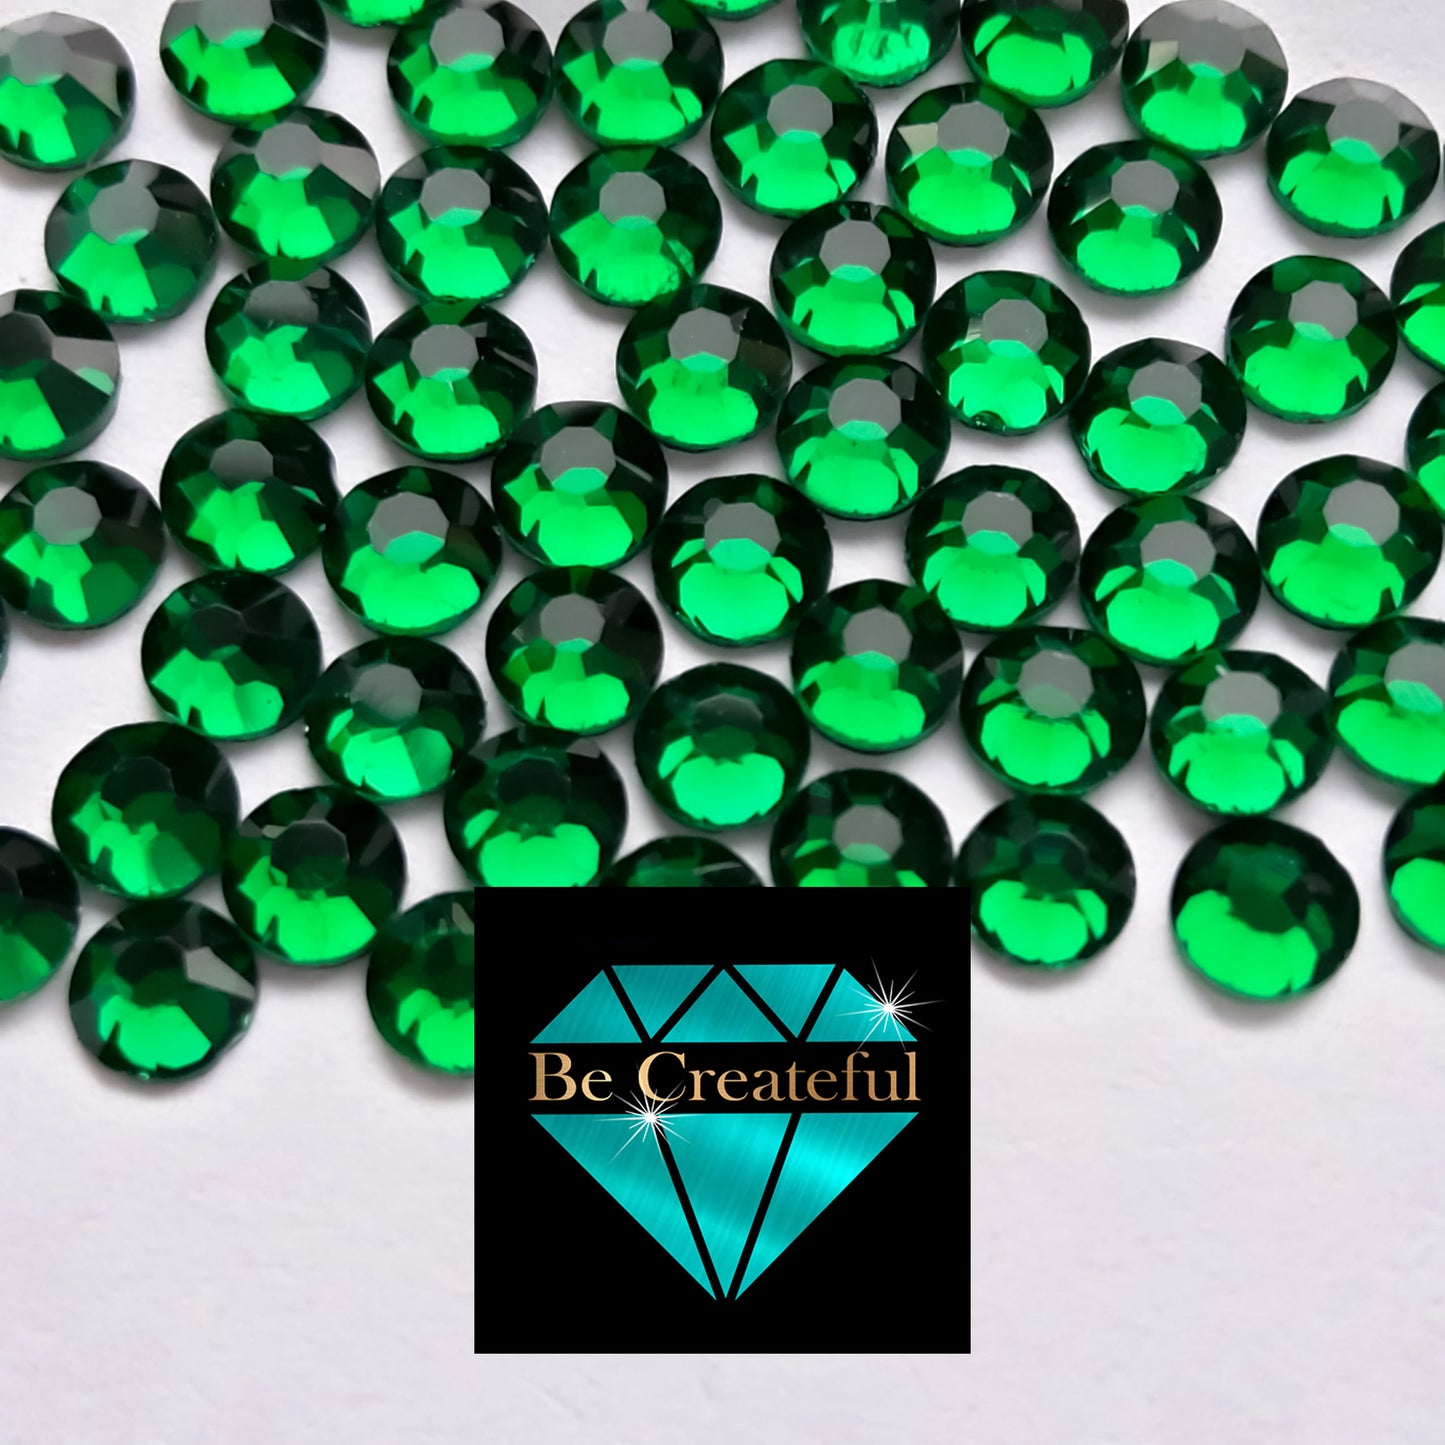 DMC Emerald Green Glass Hotfix Rhinestones - Be Createful, Beautiful Rhinestones at wholesale prices.